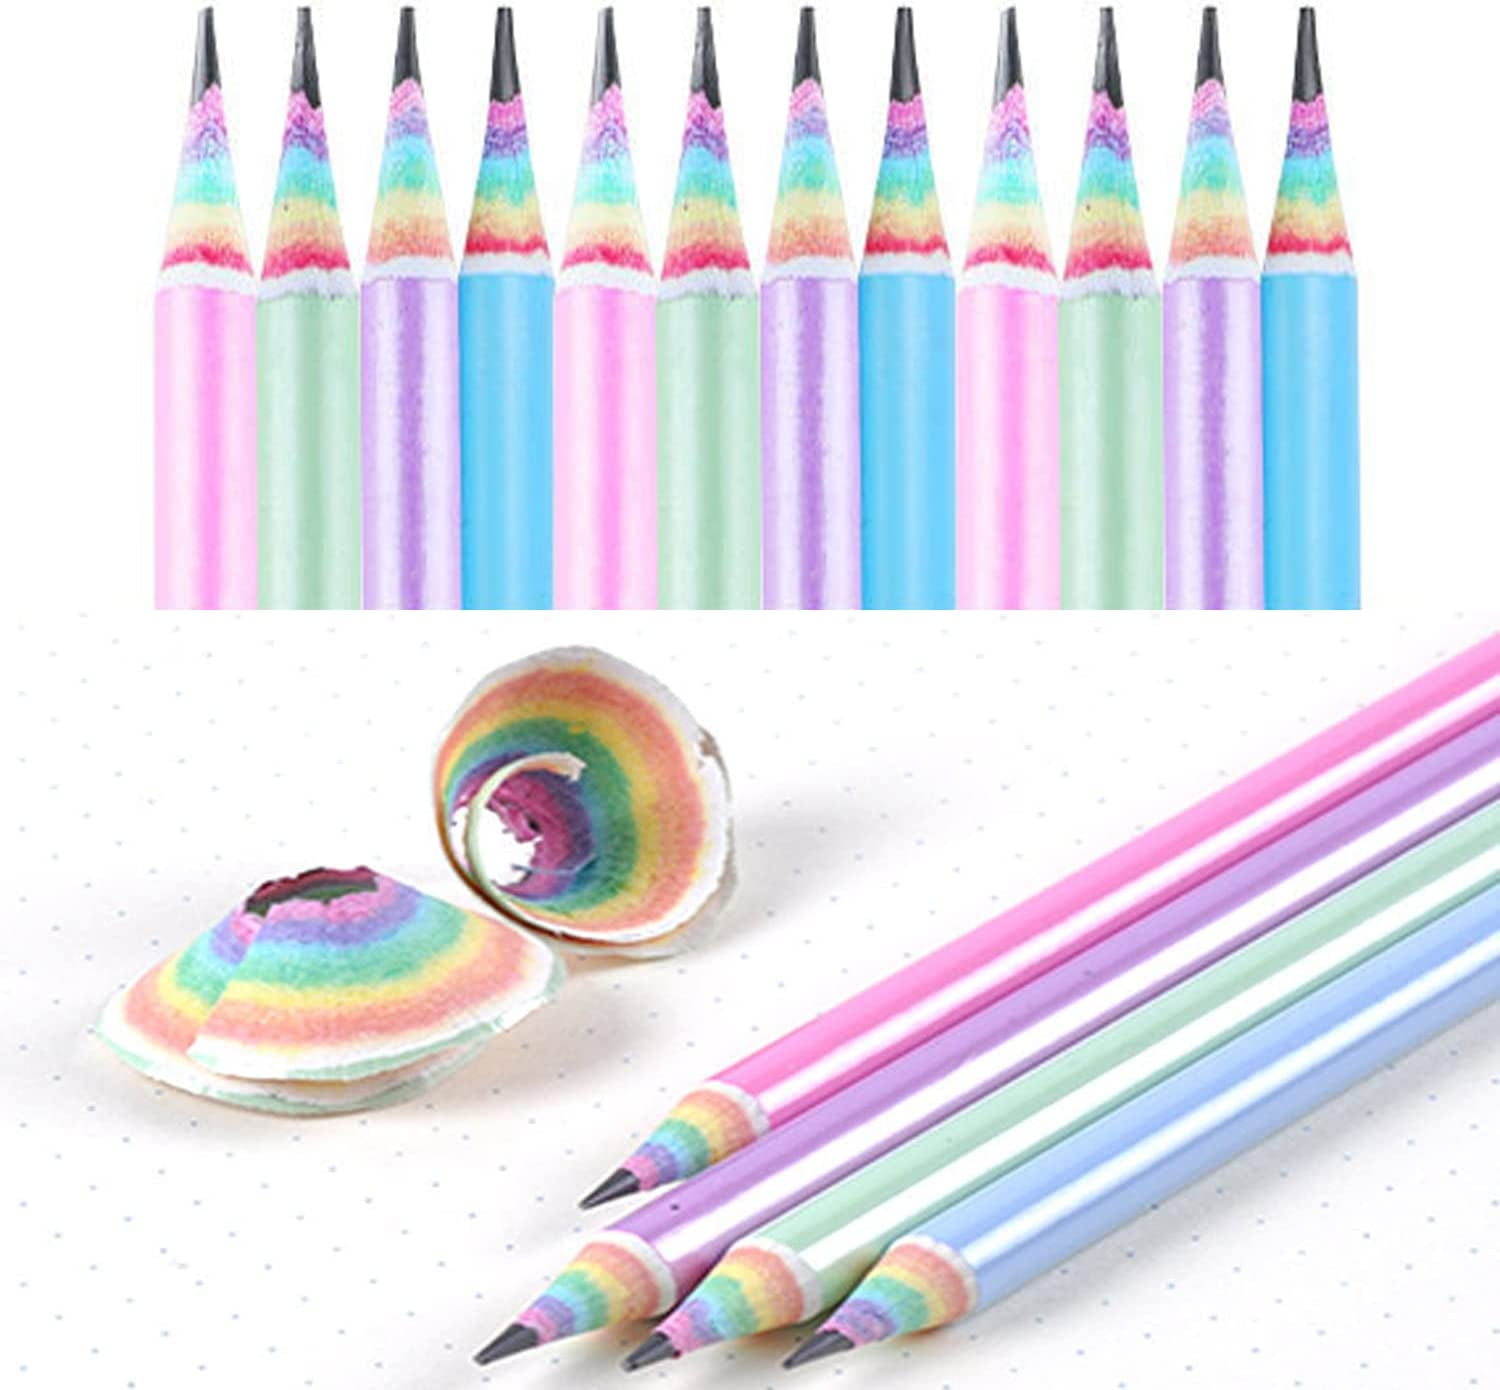  Needbrock 36 Pcs Rainbow Colored Pencils for Kids, 3